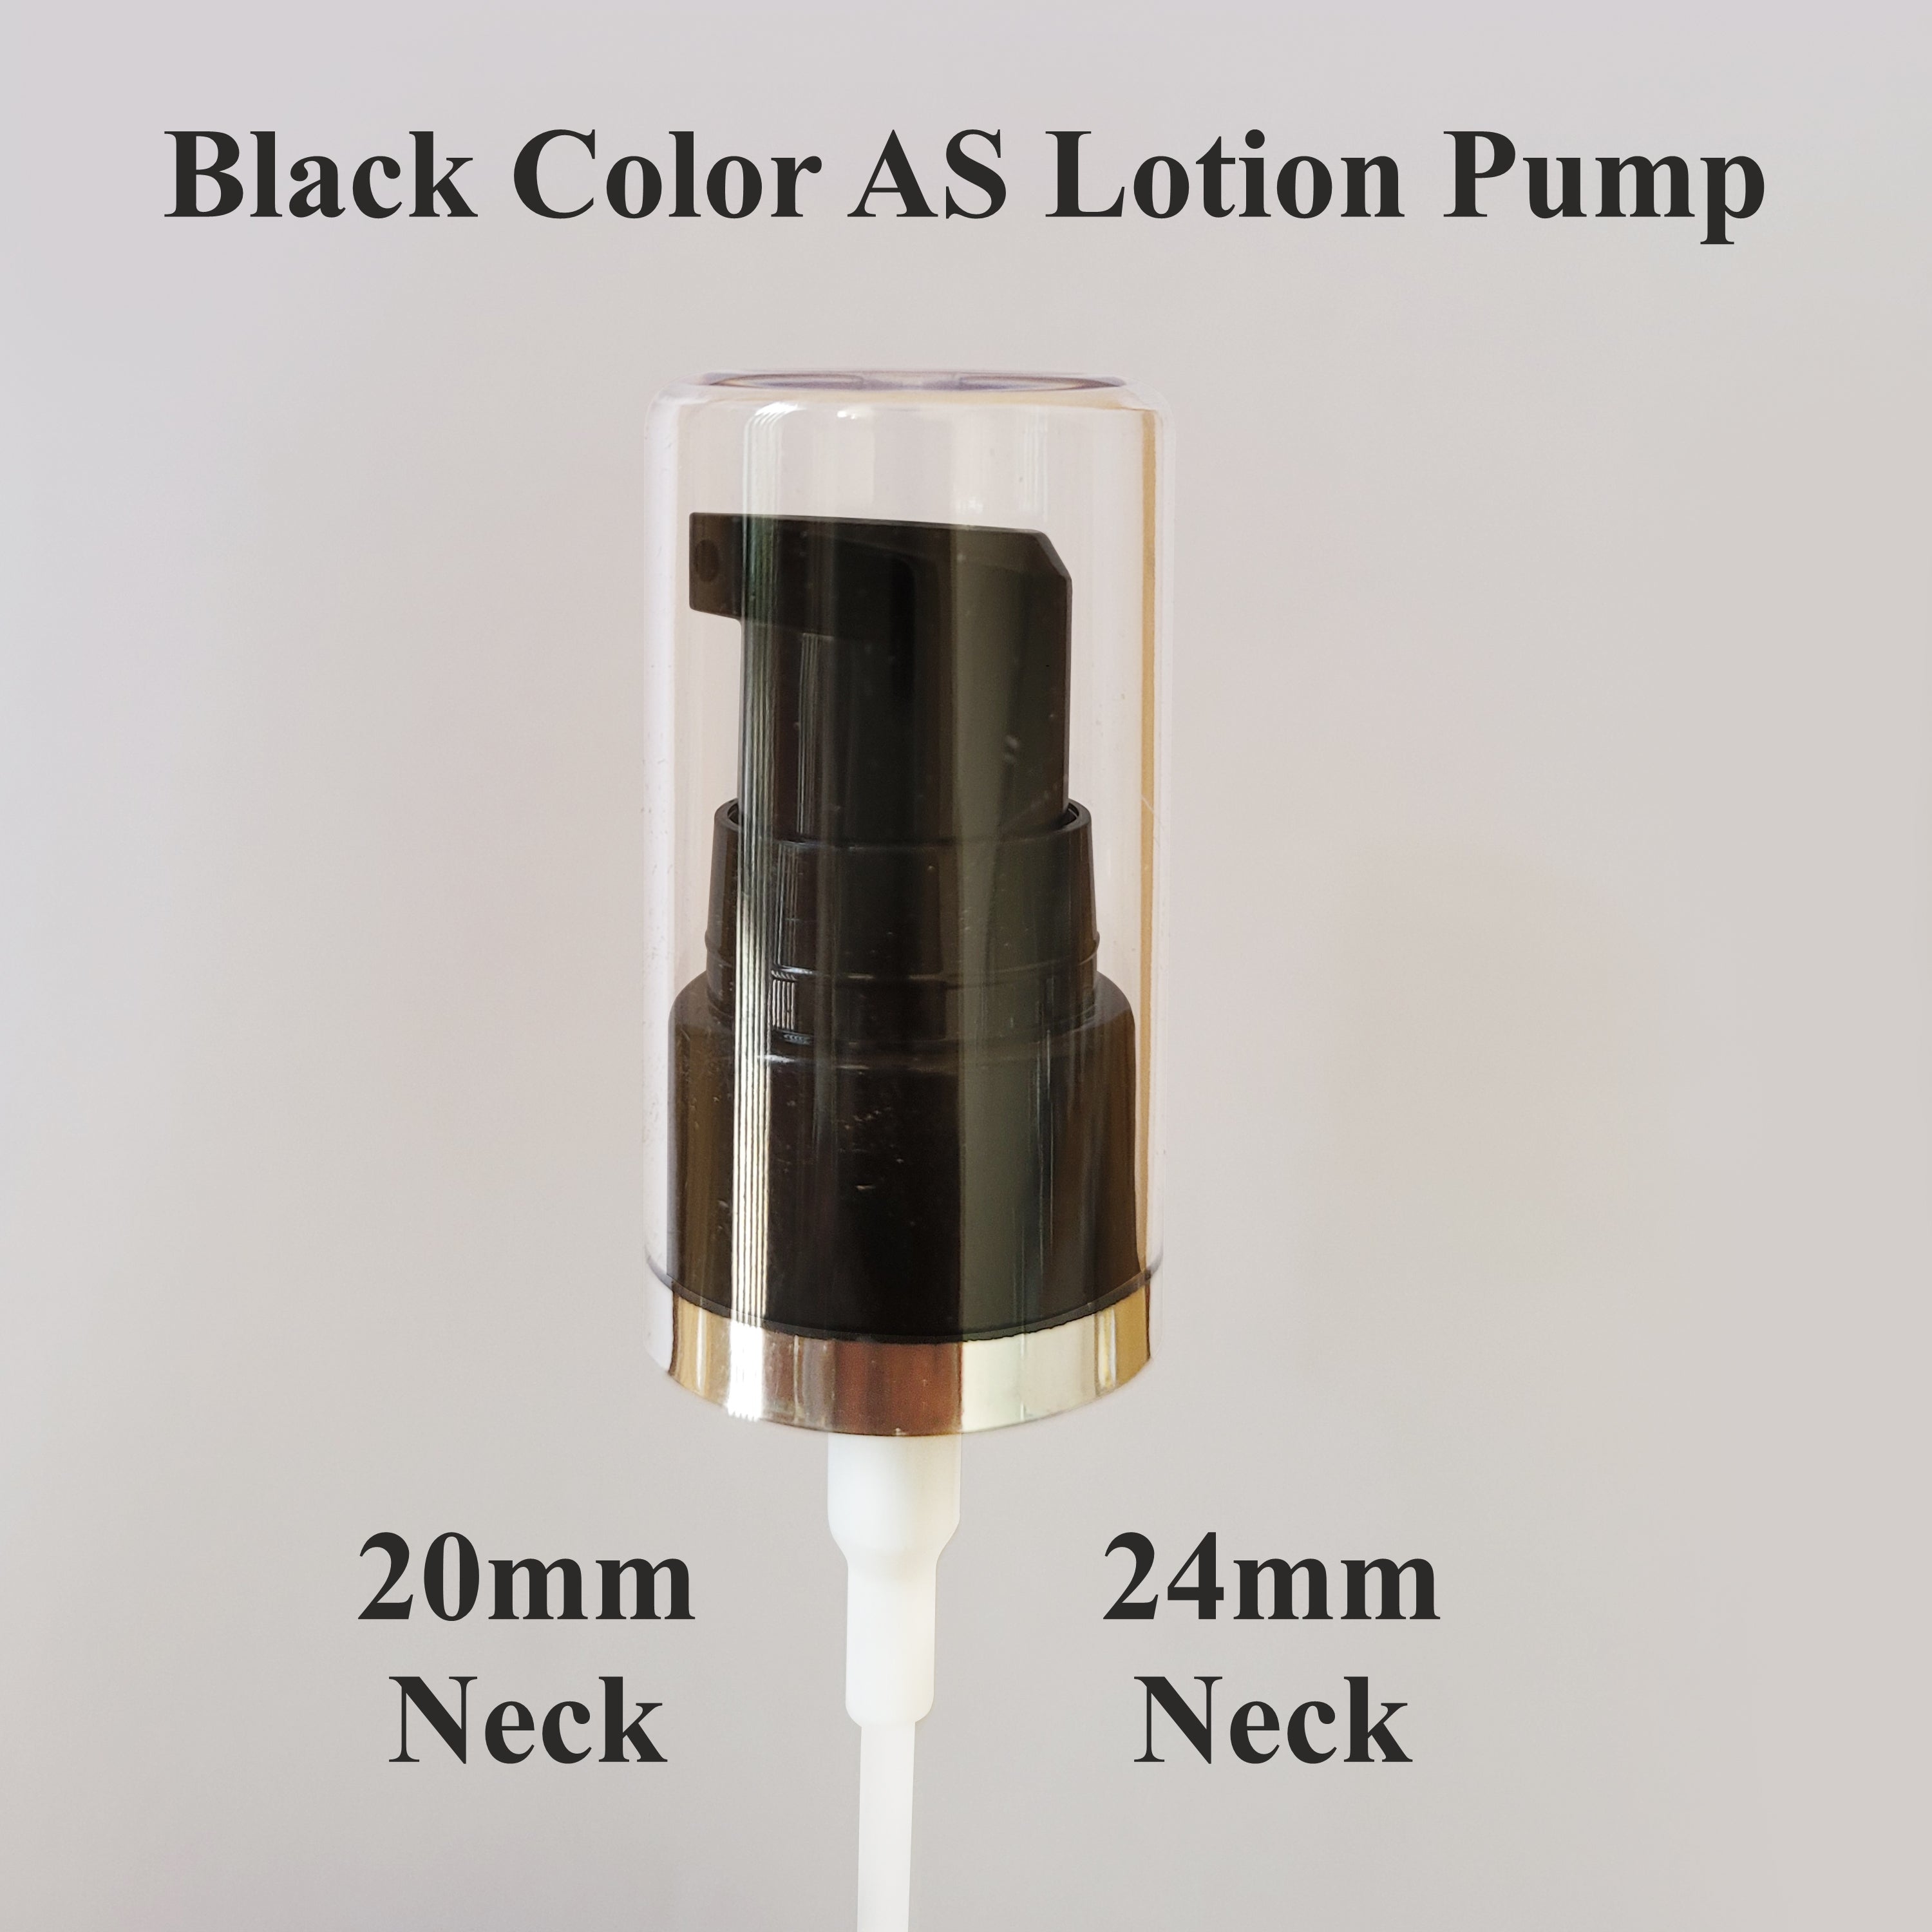 [ZMPC10] Black Color AS Lotion Pump with Beautiful Silver Streak Transparent Cap- 20mm & 24mm Neck